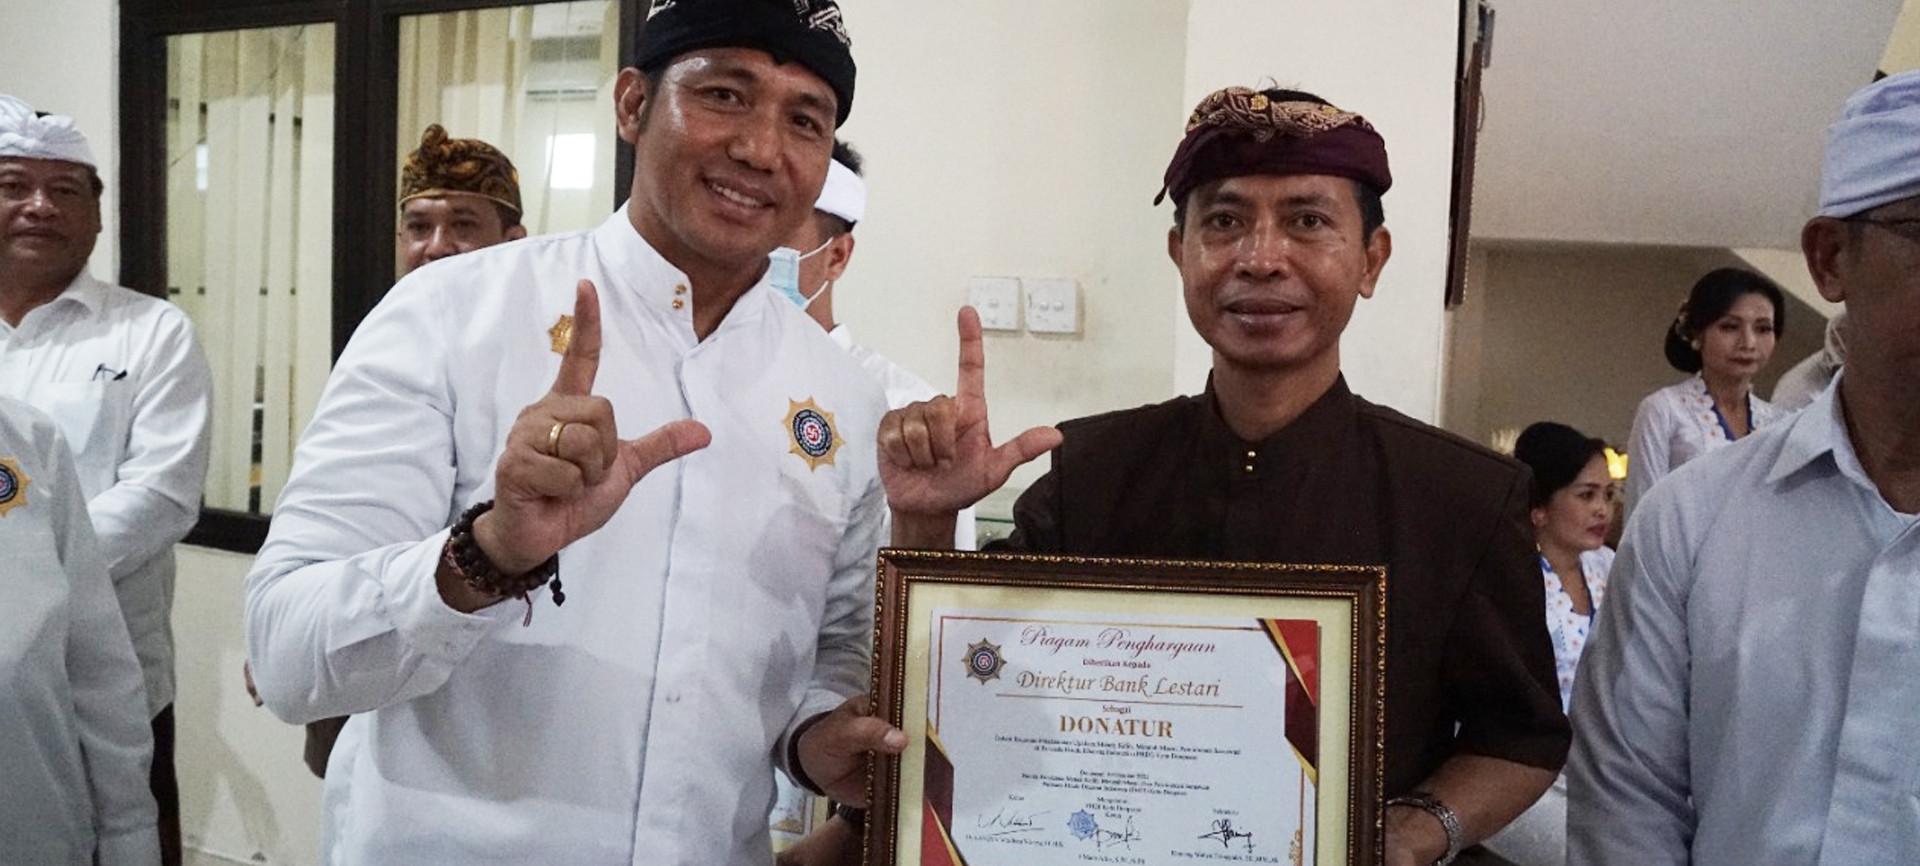 Turut Melaksanakan Pelayanan Umat, Bank Lestari Bali (BPR) Berikan Dukungan pada Upacara Manusa Yadnya yang Diinisiasi PHDI